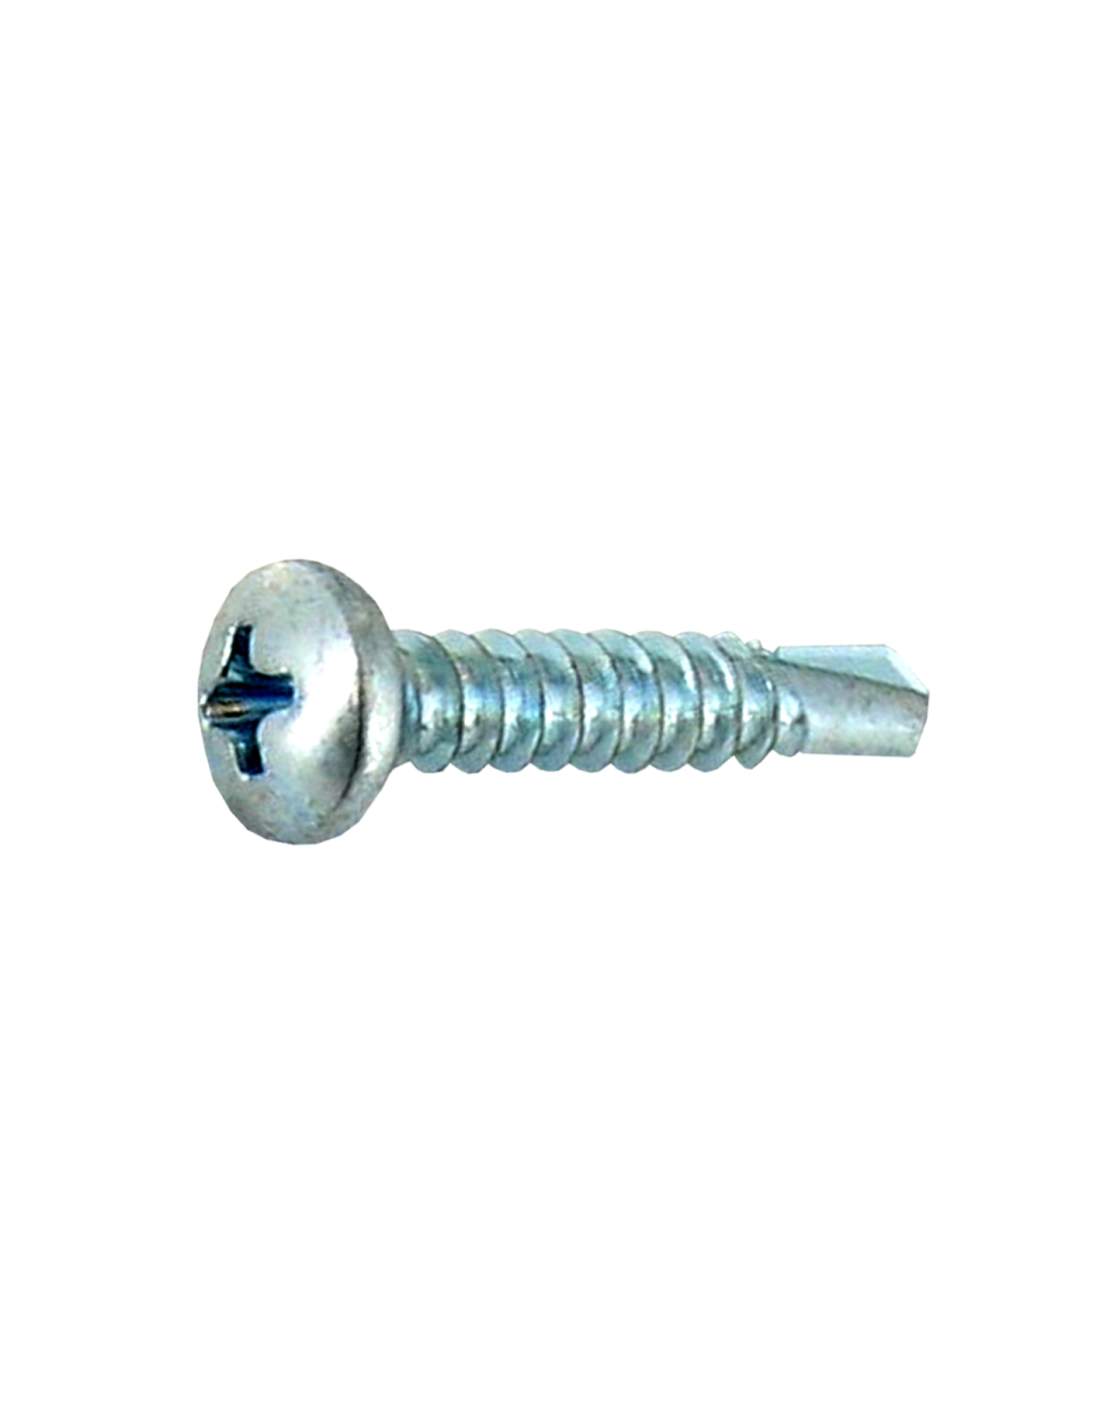 AZI 4.2x13 pan head self-drilling sheet metal screws, 22 pcs.